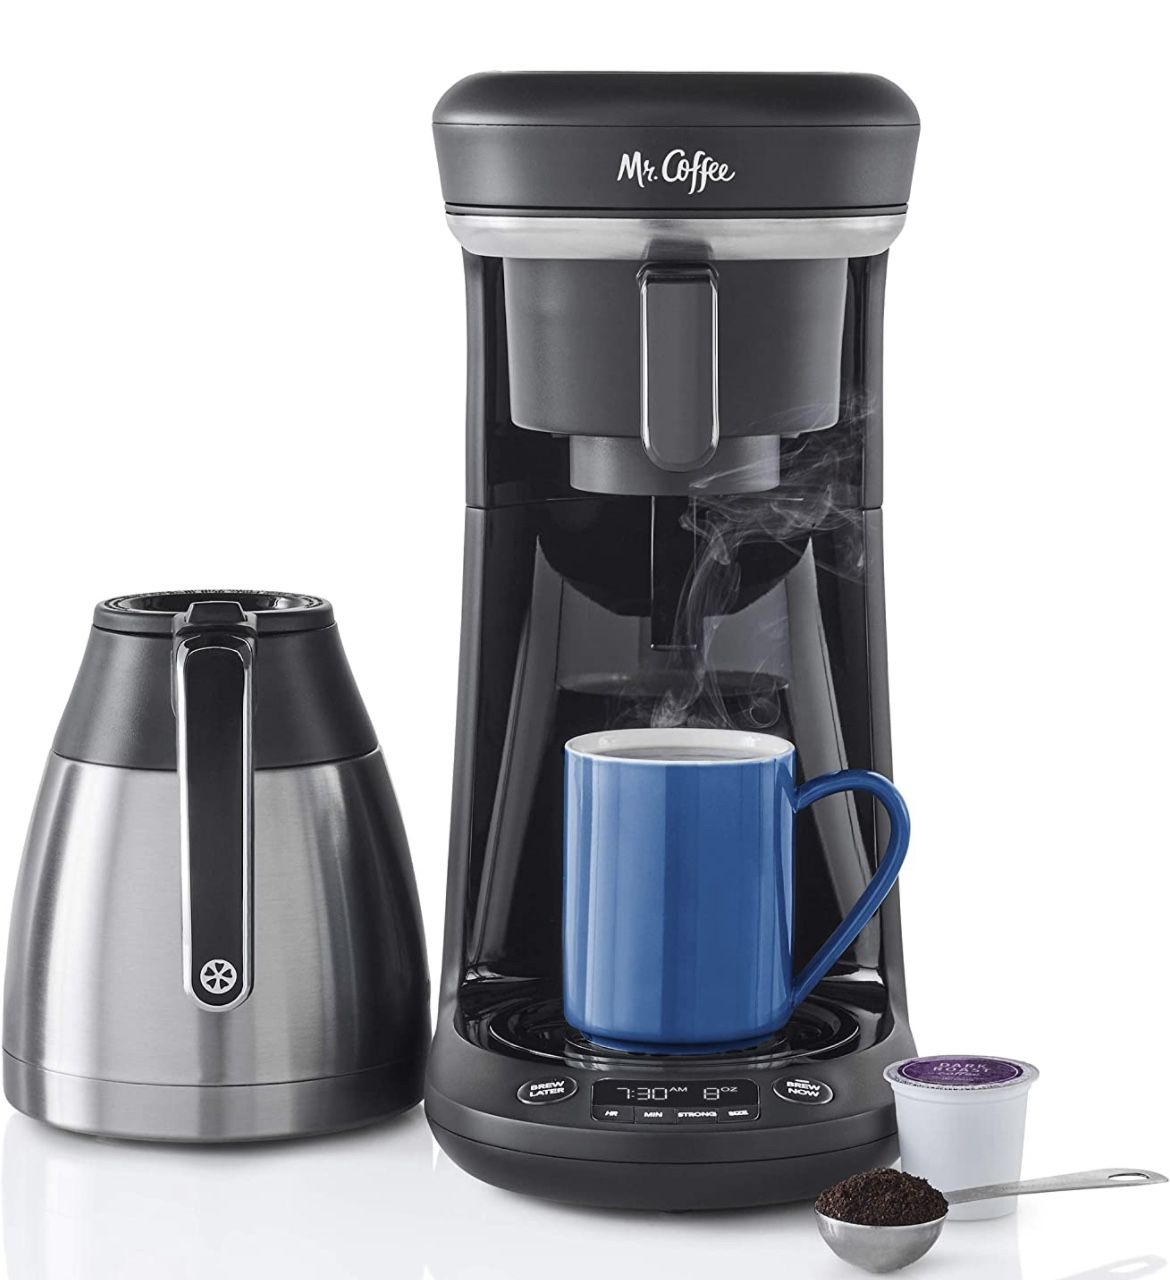 Mr. Coffee Coffee Maker, Programmable Coffee Machine 269